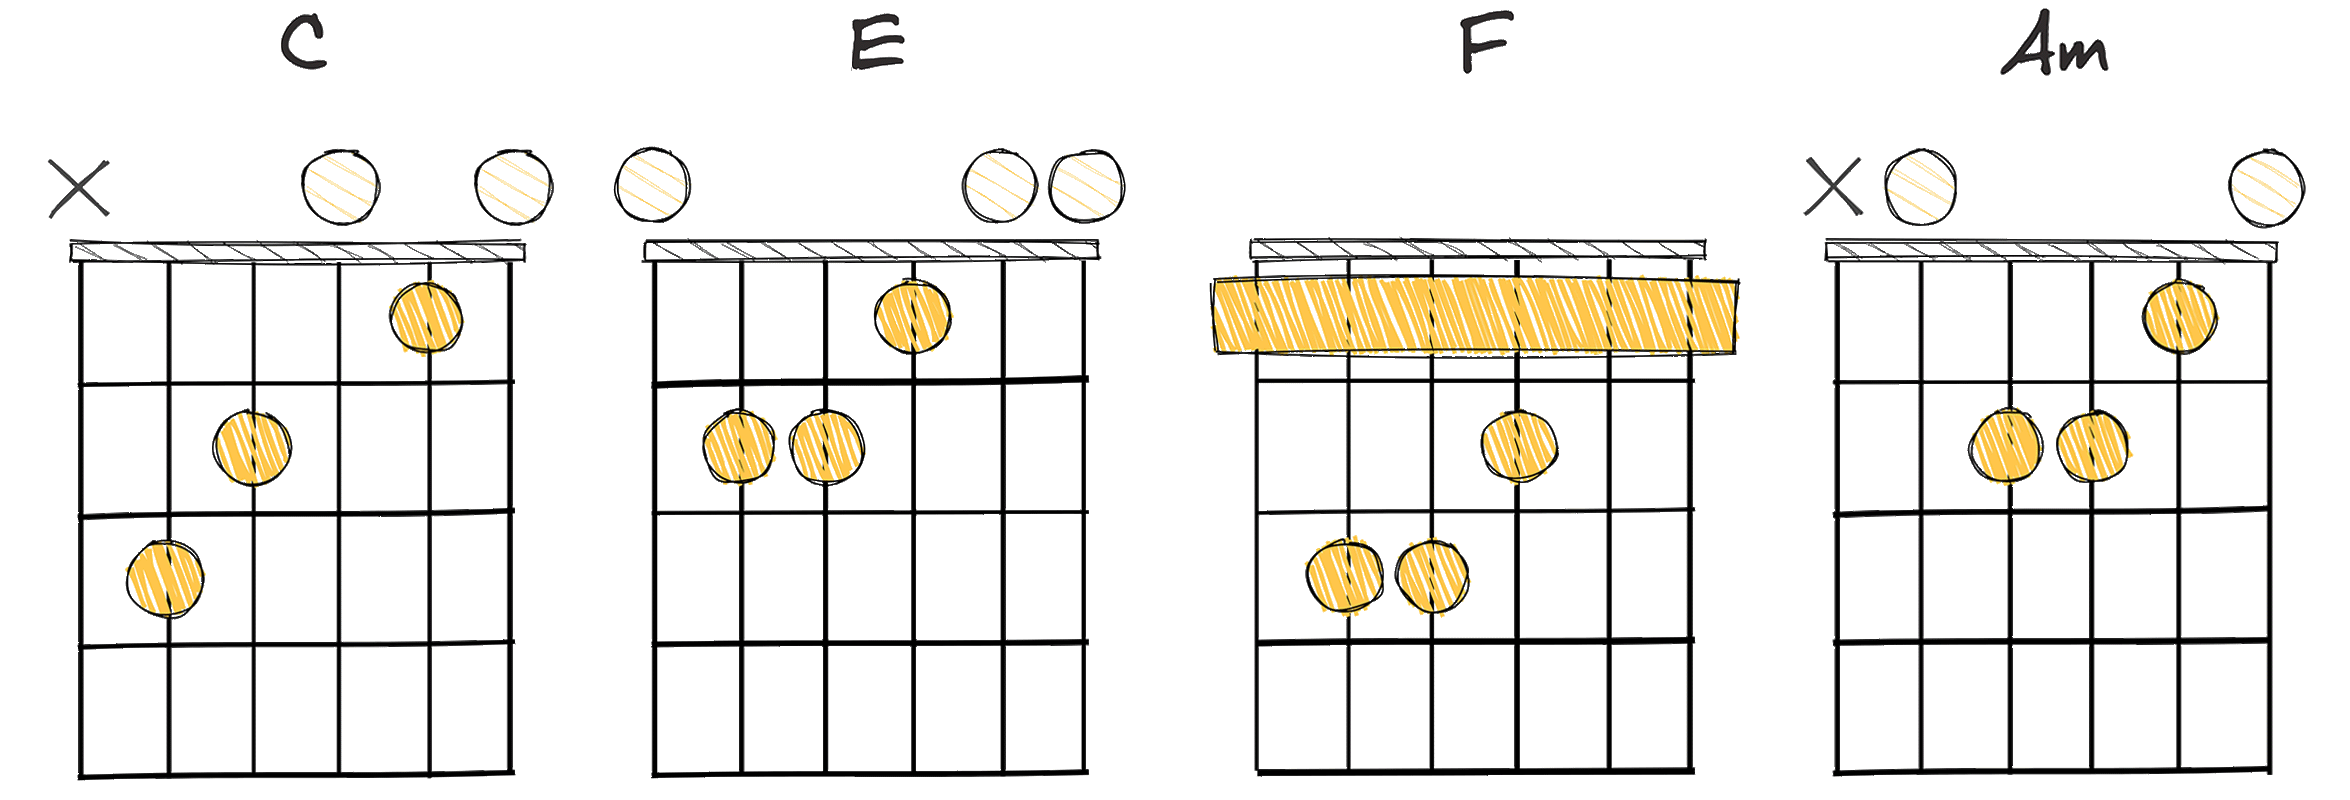 I-III-IV-vi (1-3-4-6) chords diagram